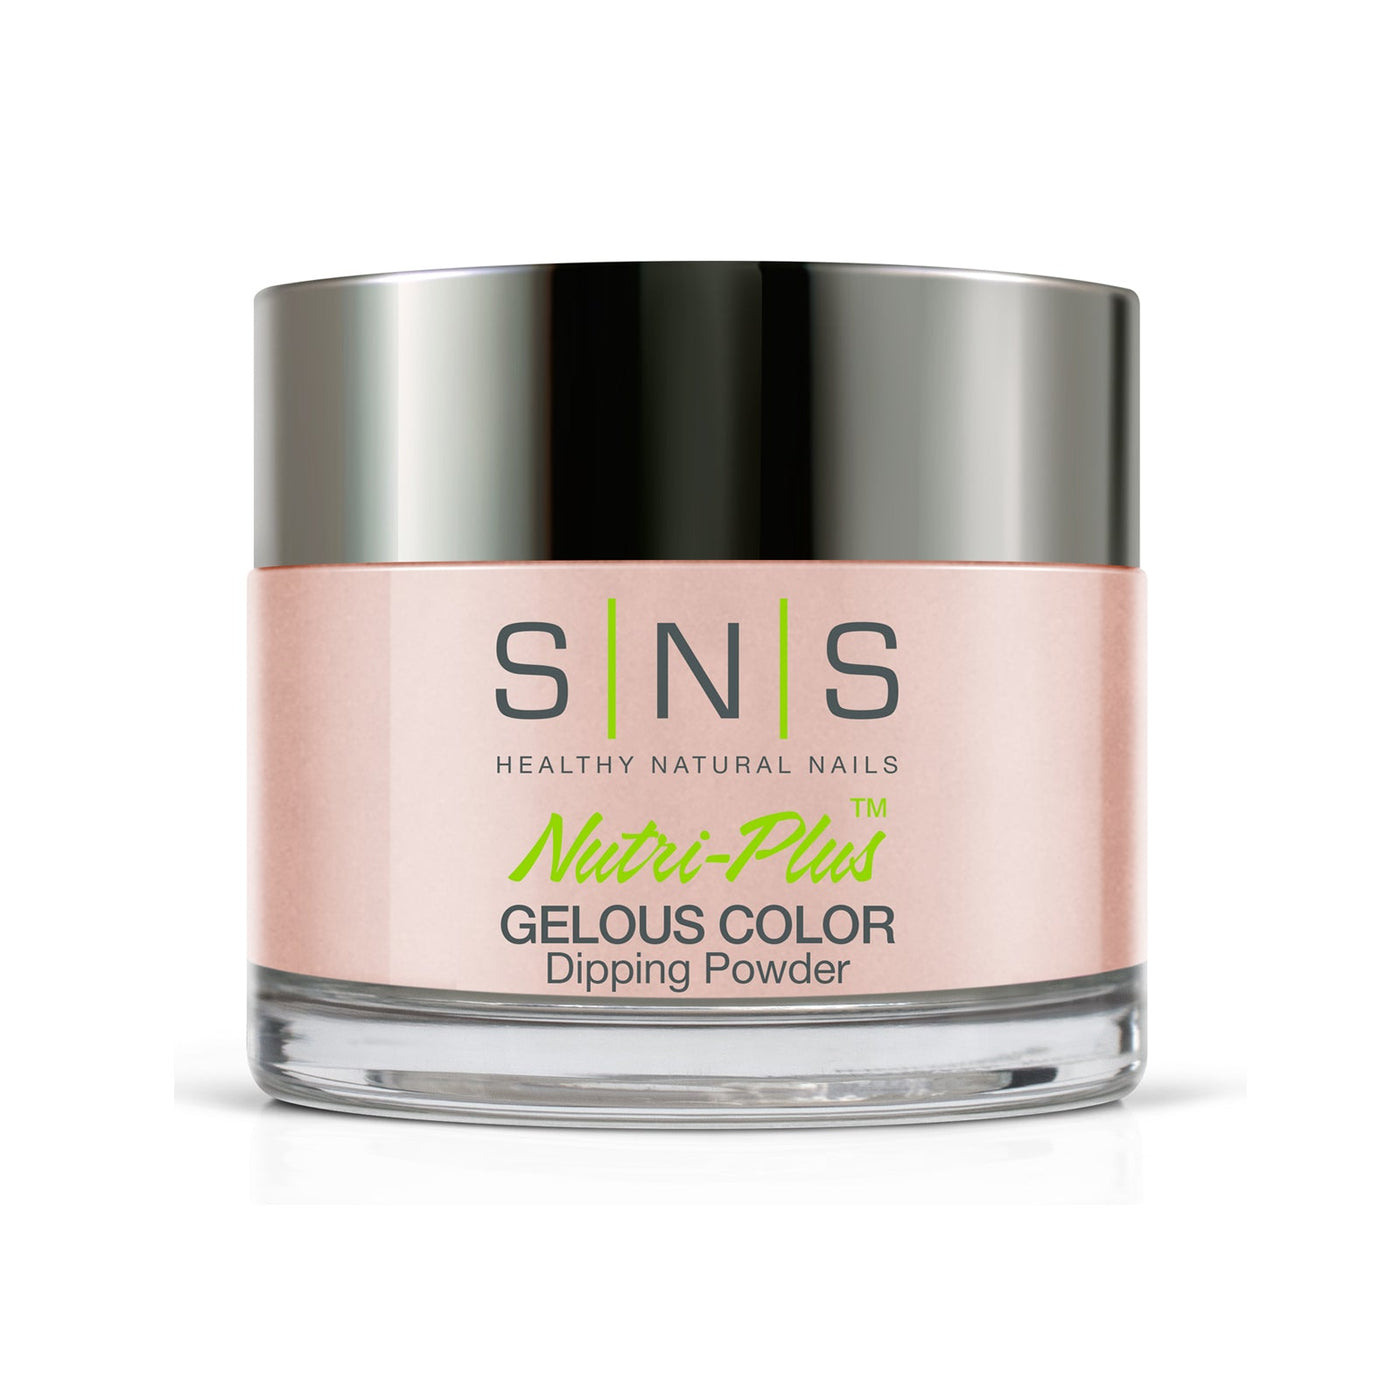 SNS Gelous Color Dipping Powder LV13 La Boom (43g) packaging